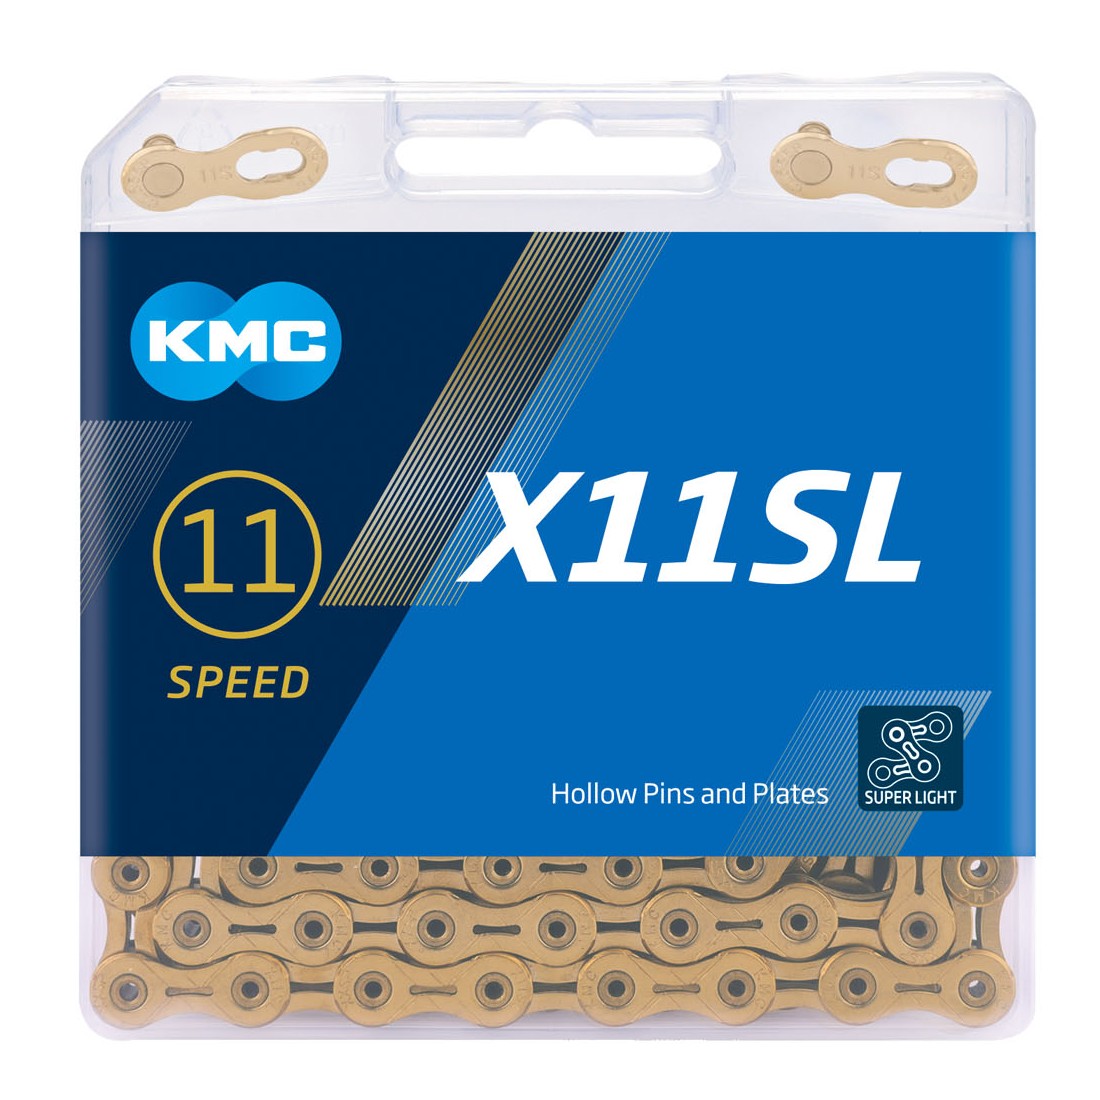 KMC X11SL Super Light 11-Speed Bike Chain 118 Links - Gold